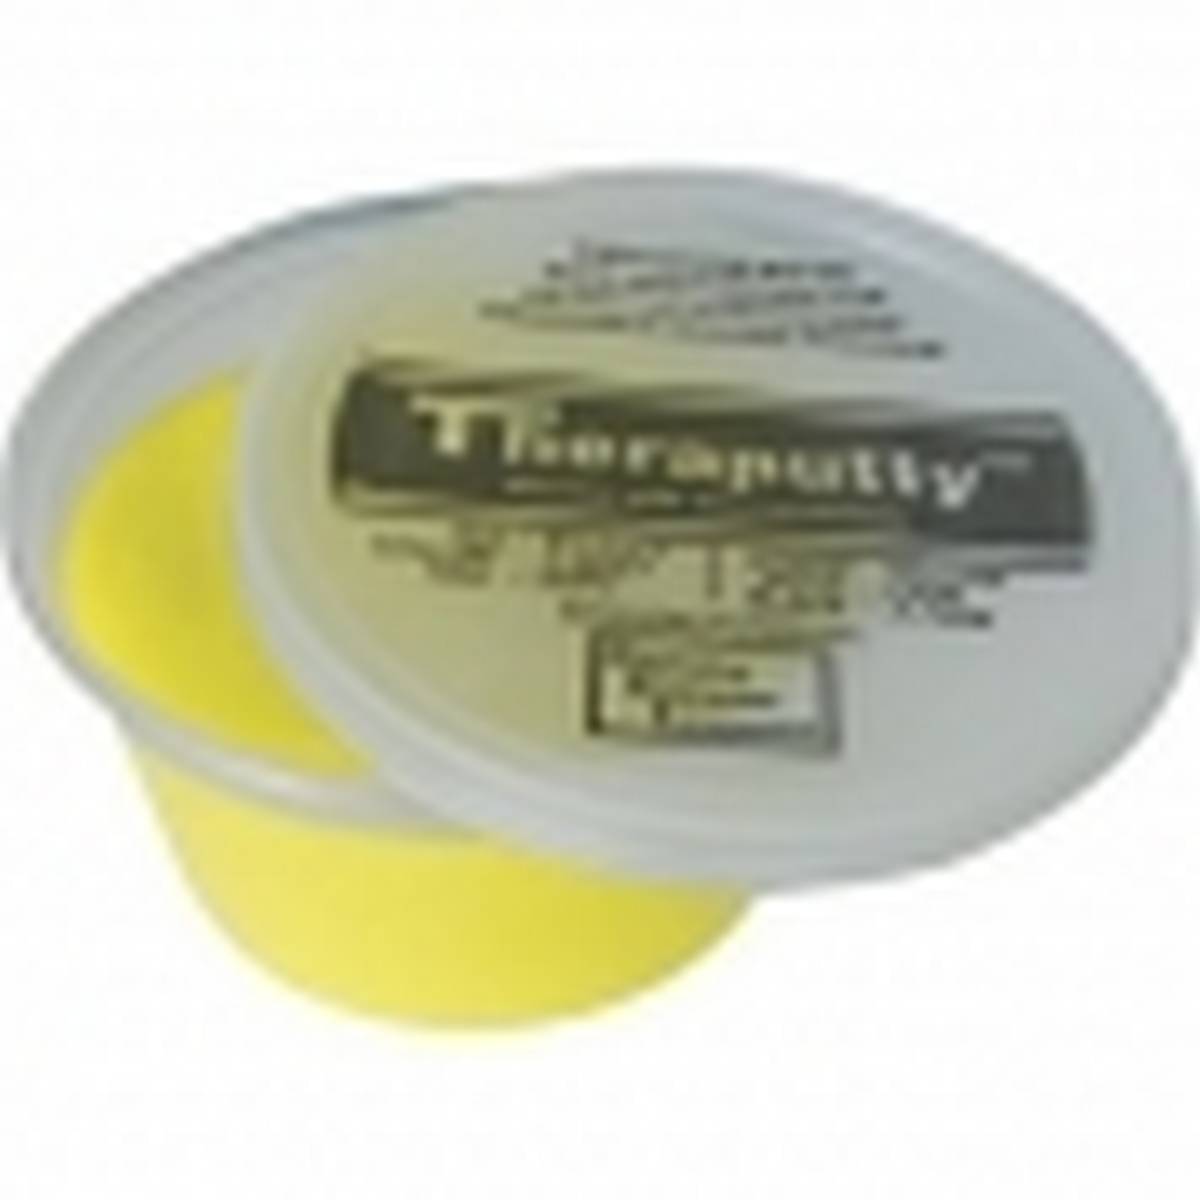 Theraputty Yellow - X Soft (2 oz)